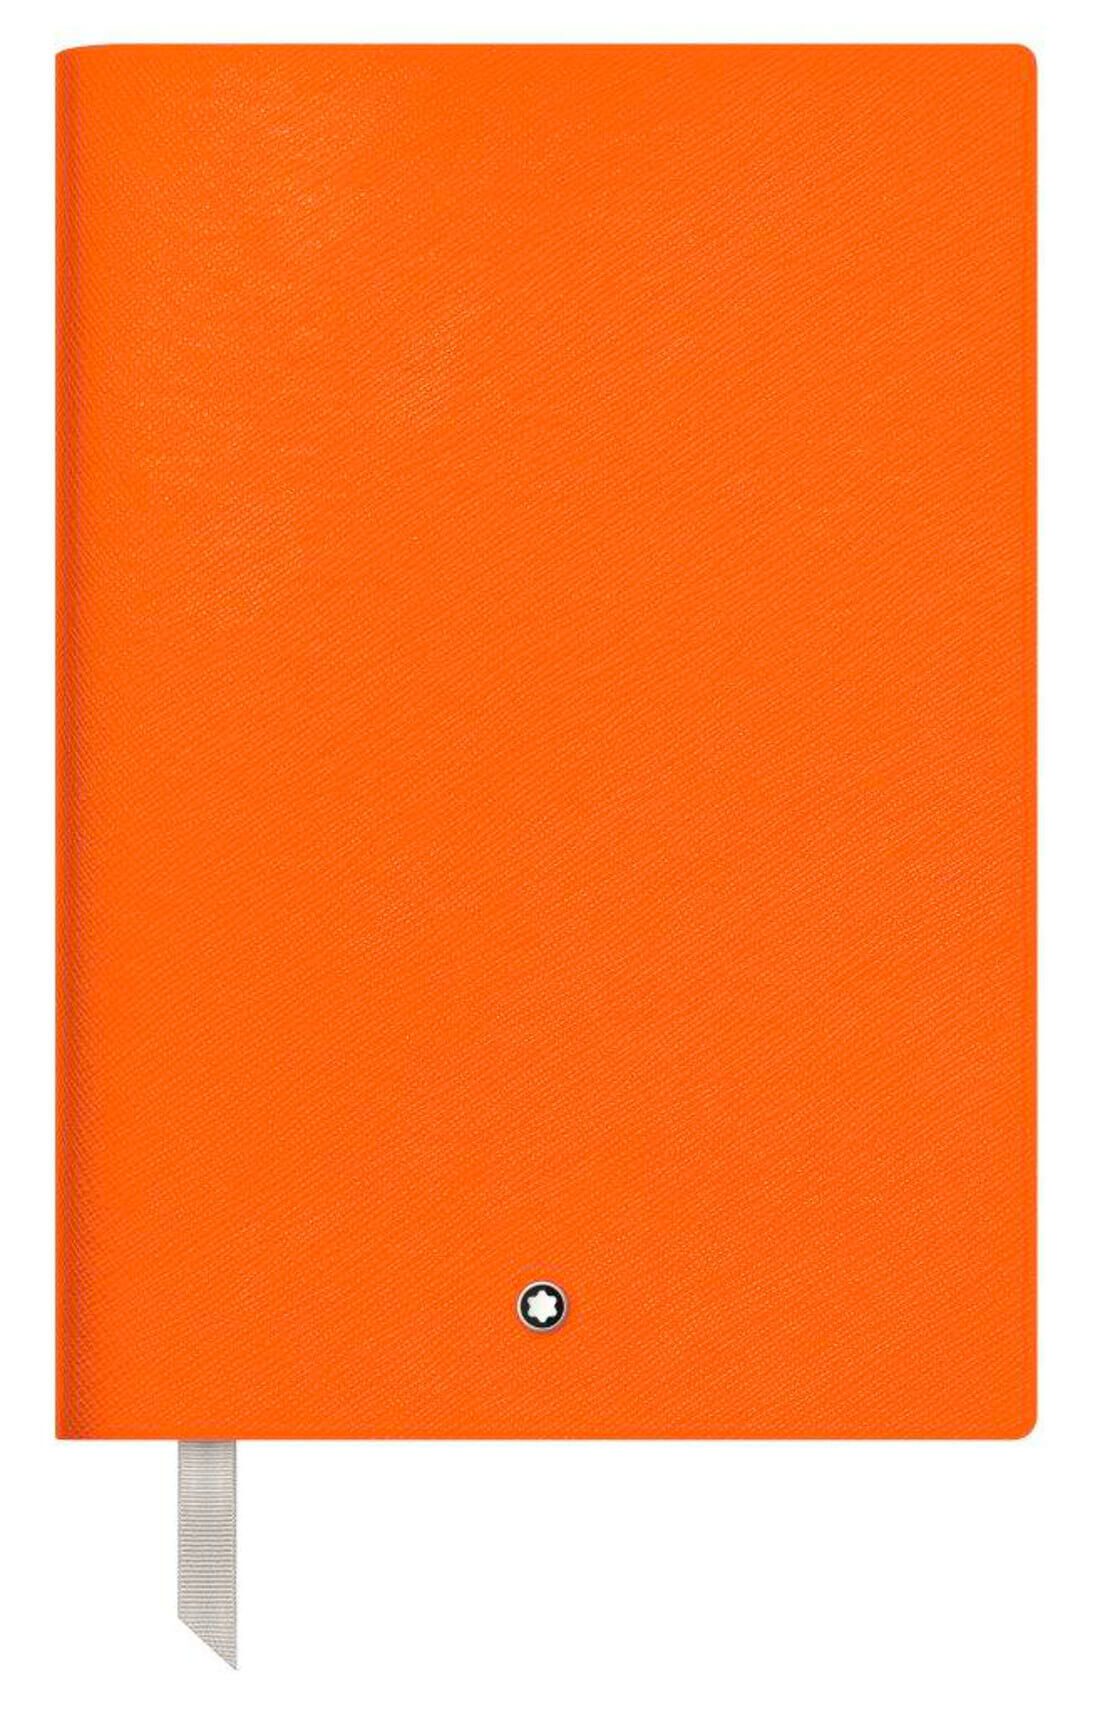 montblanc-fine-stationery-notebook-146-lucky-orange-116225